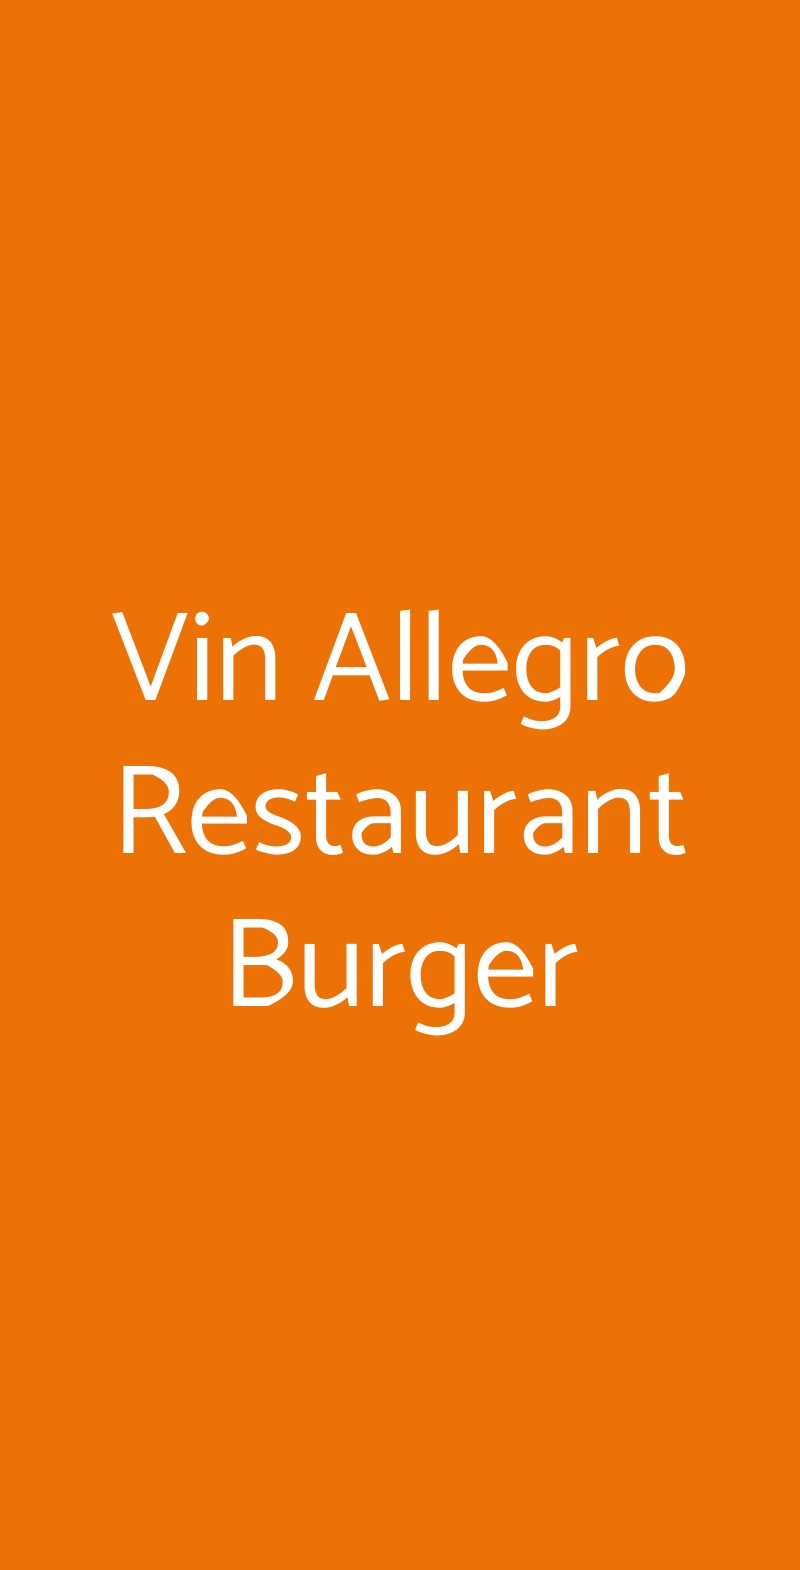 Vin Allegro Restaurant Burger Monza menù 1 pagina